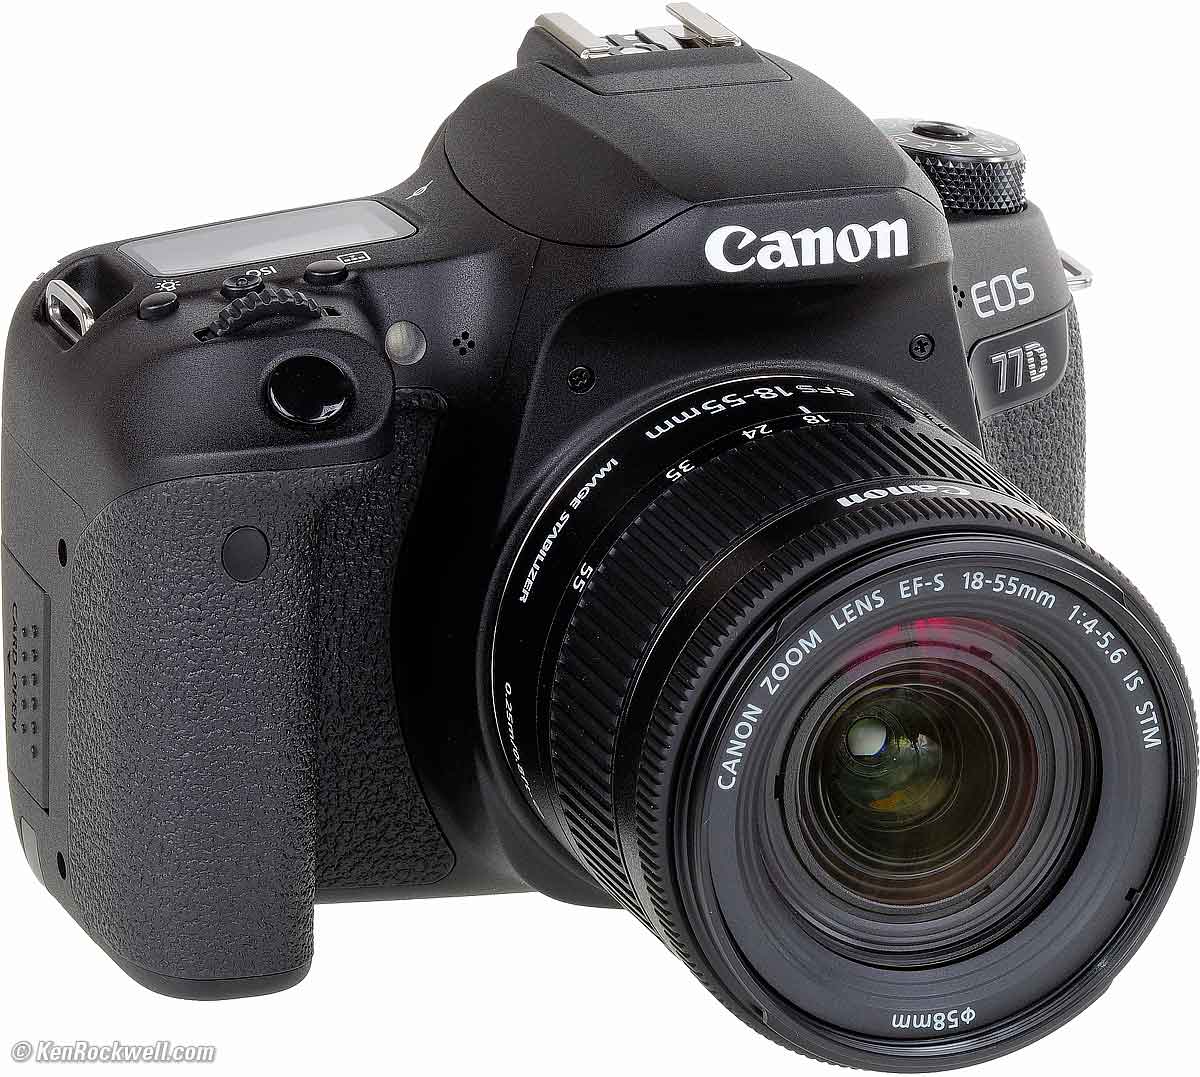 balkon Spotlijster Wieg Canon 77D (EOS9000D) Review